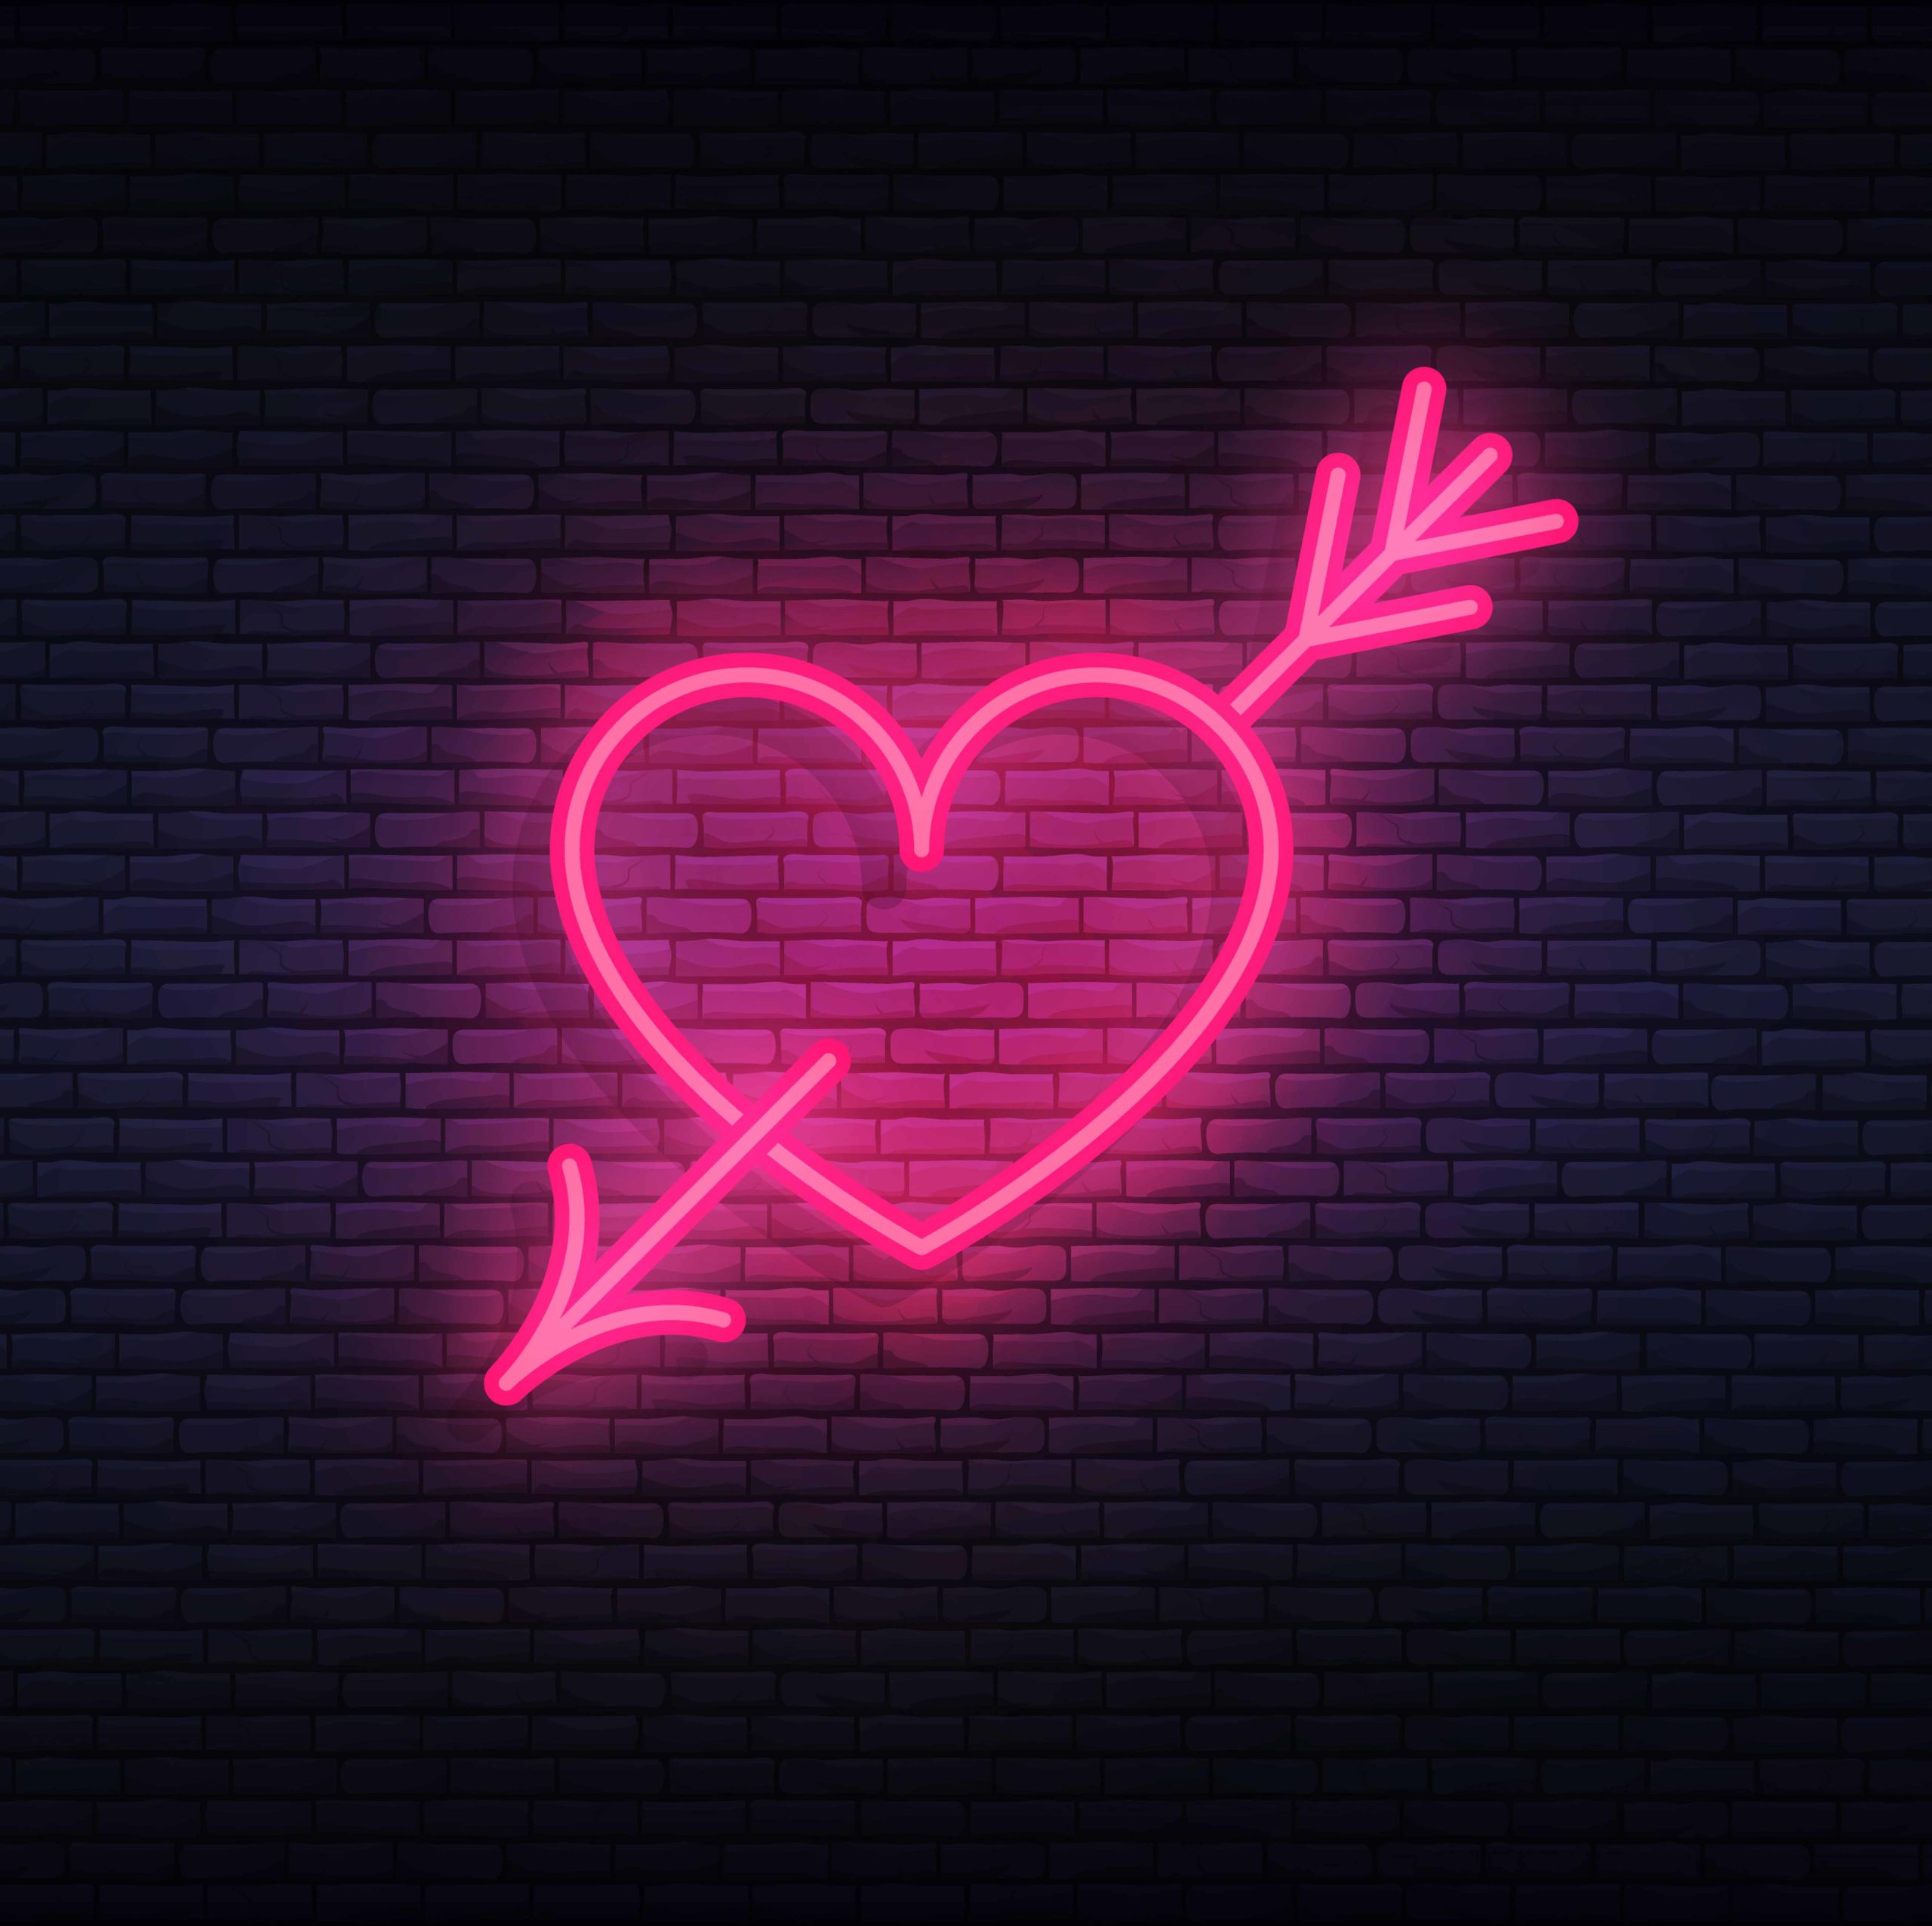 HEART23 Animated Wall with Arrow and Heart – Studio Backdrops